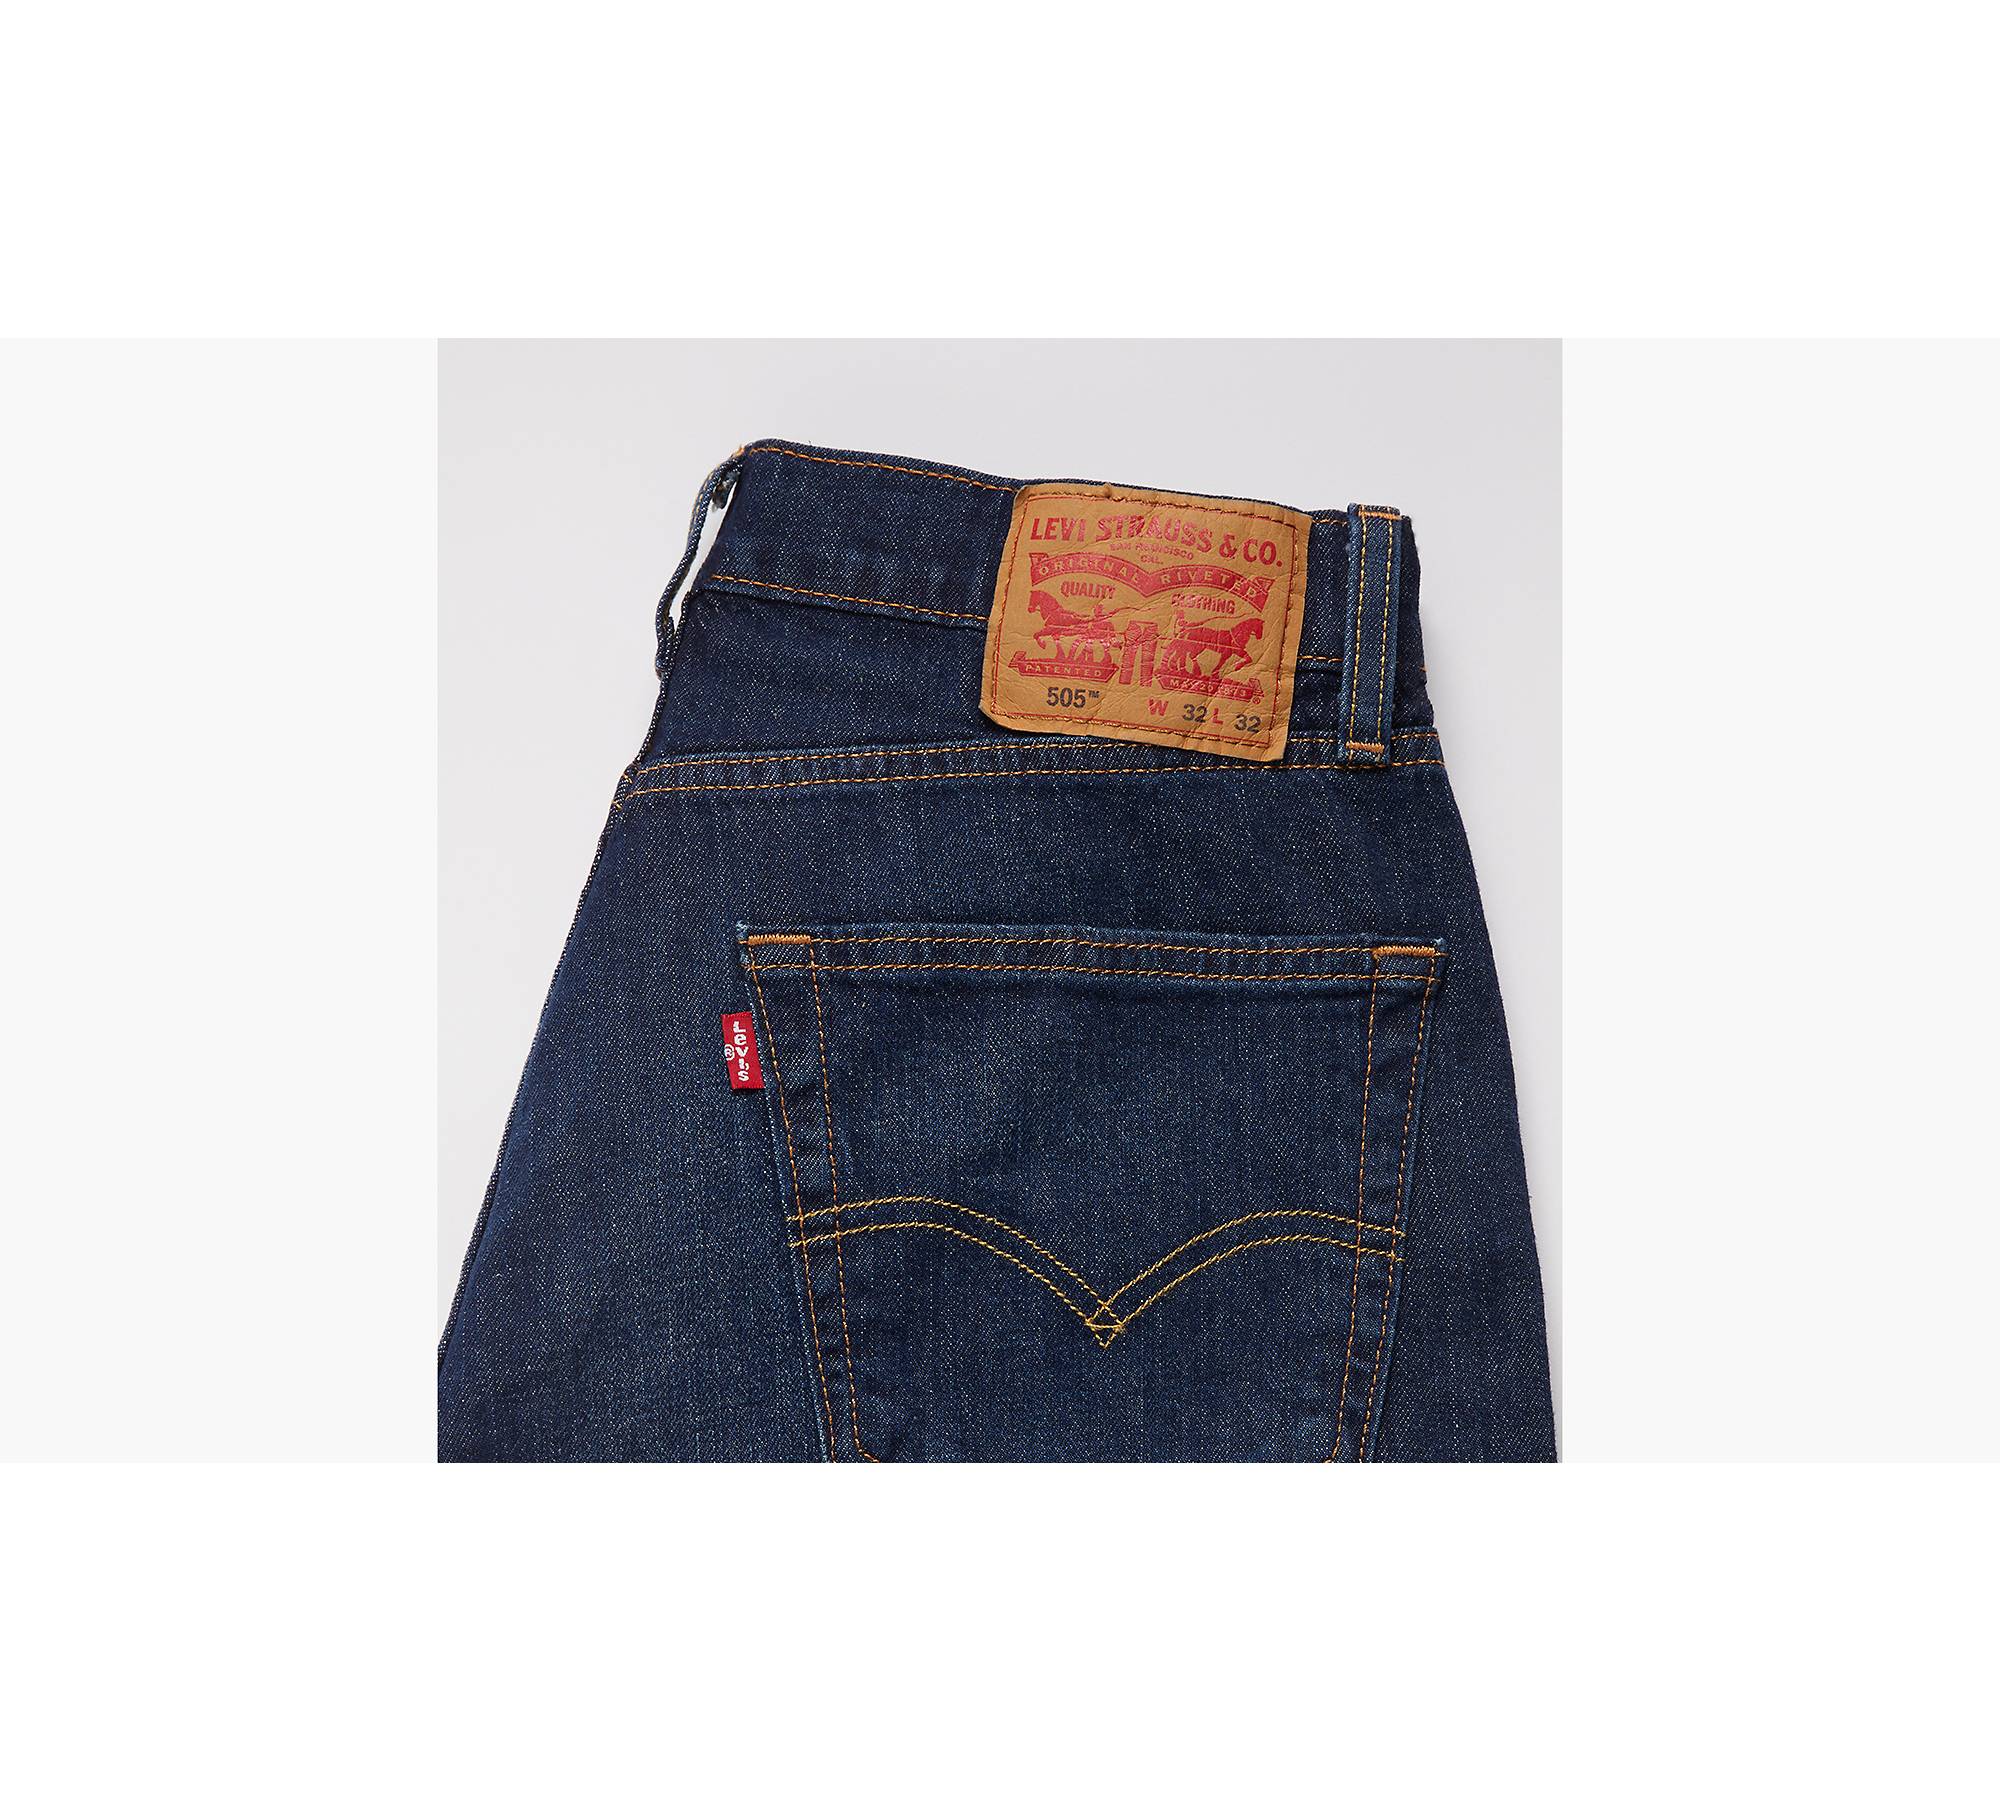 Levi's Men's 505 Regular Fit Jean, Dark Stonewash, 34x32 